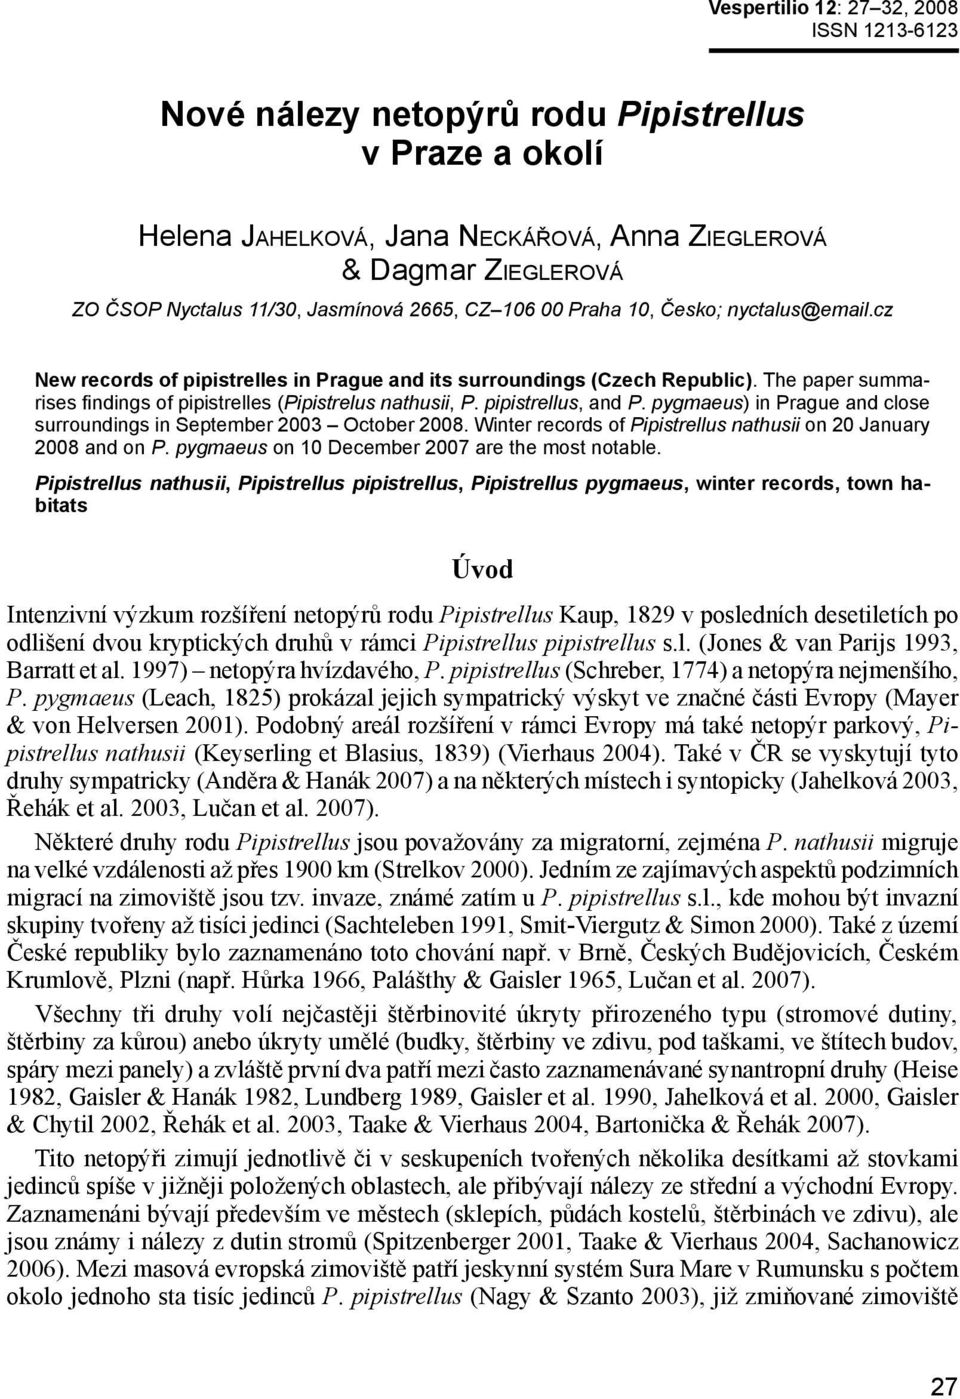 The paper summarises findings of pipistrelles (Pipistrelus nathusii, P. pipistrellus, and P. pygmaeus) in Prague and close surroundings in September 2003 October 2008.